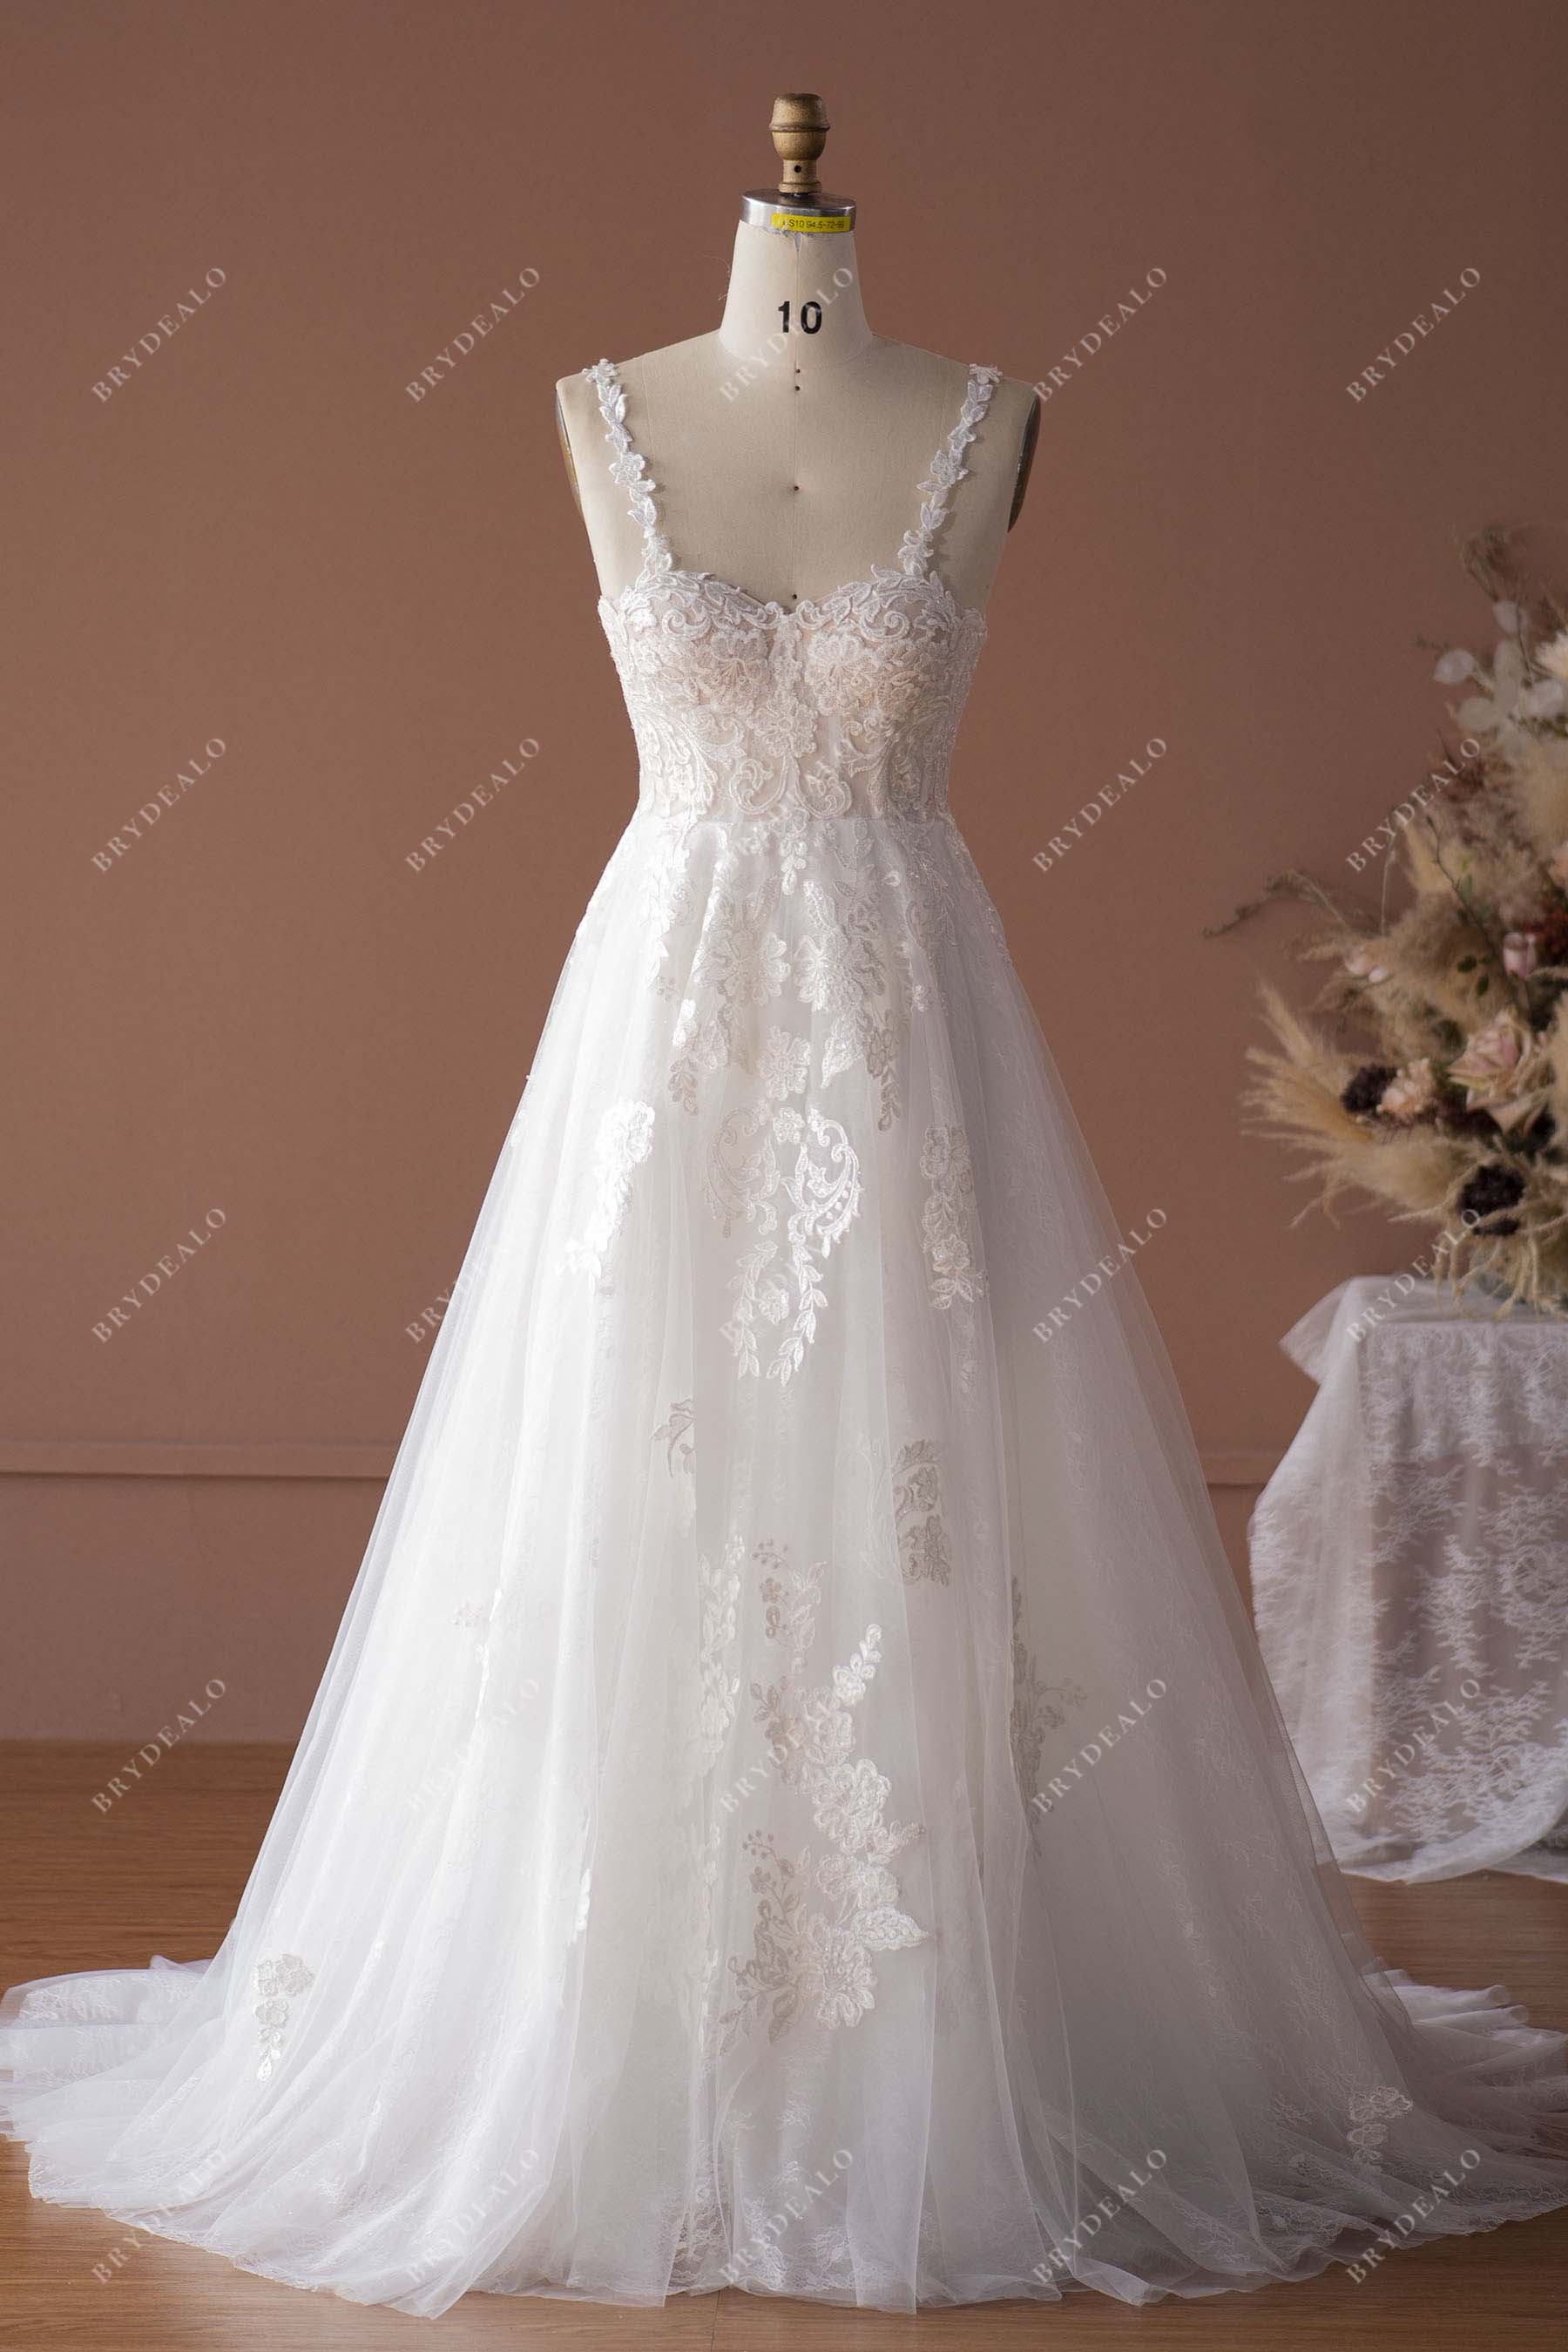 Designer Lace Spaghetti Straps Corset Wedding Ball Gown